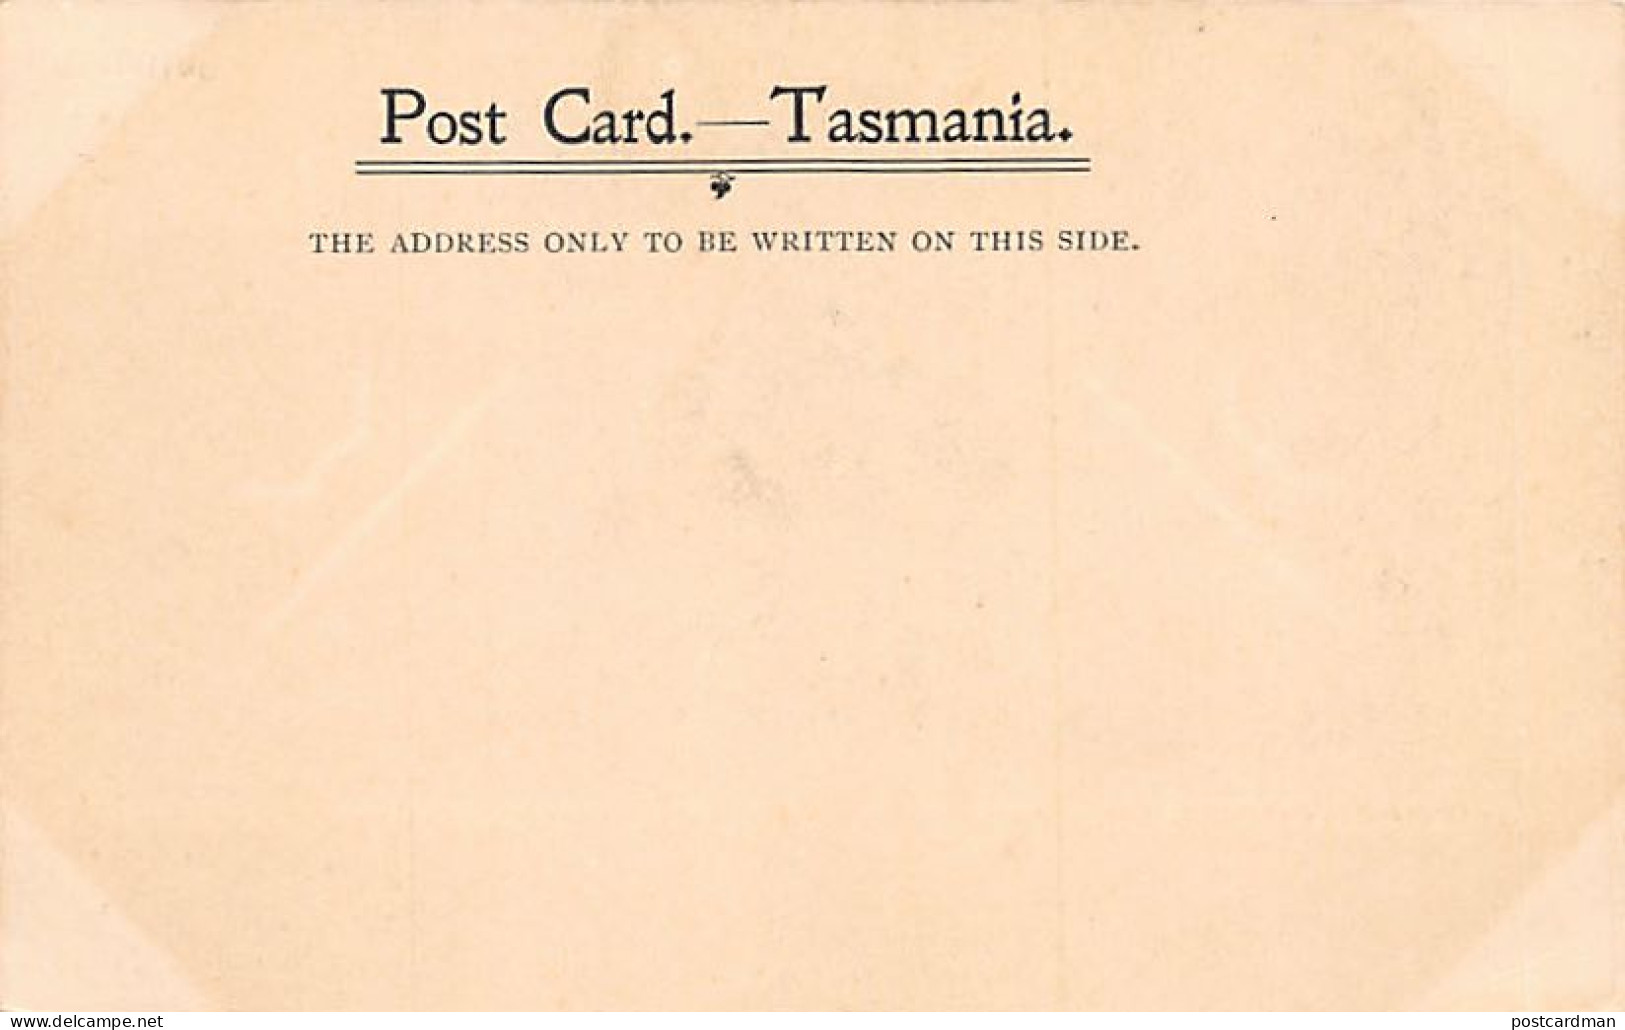 Australia - HOBART (TAS) Tessellated Pavement, Eagle Hawk Neck - Publ. J. Walch & Sons  - Hobart